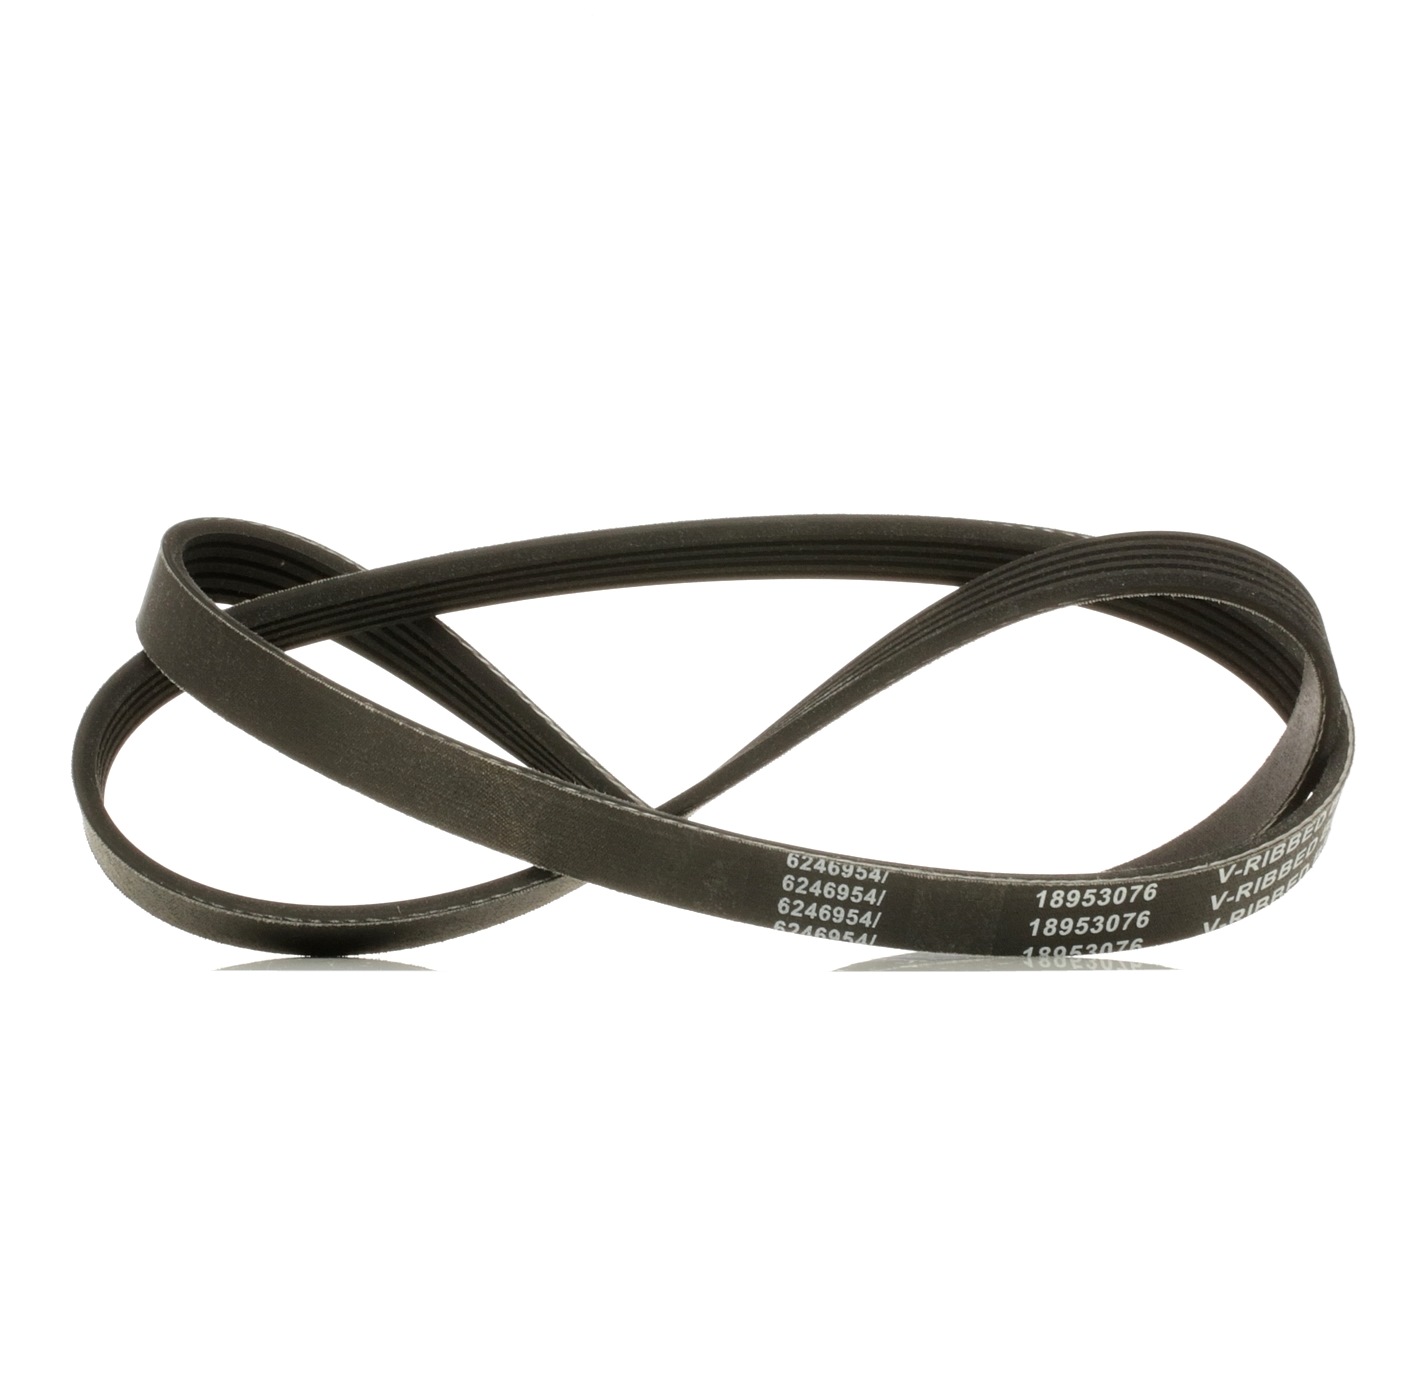 MG MGF Ribbed belt 18953076 RIDEX PLUS 305P0392P online buy